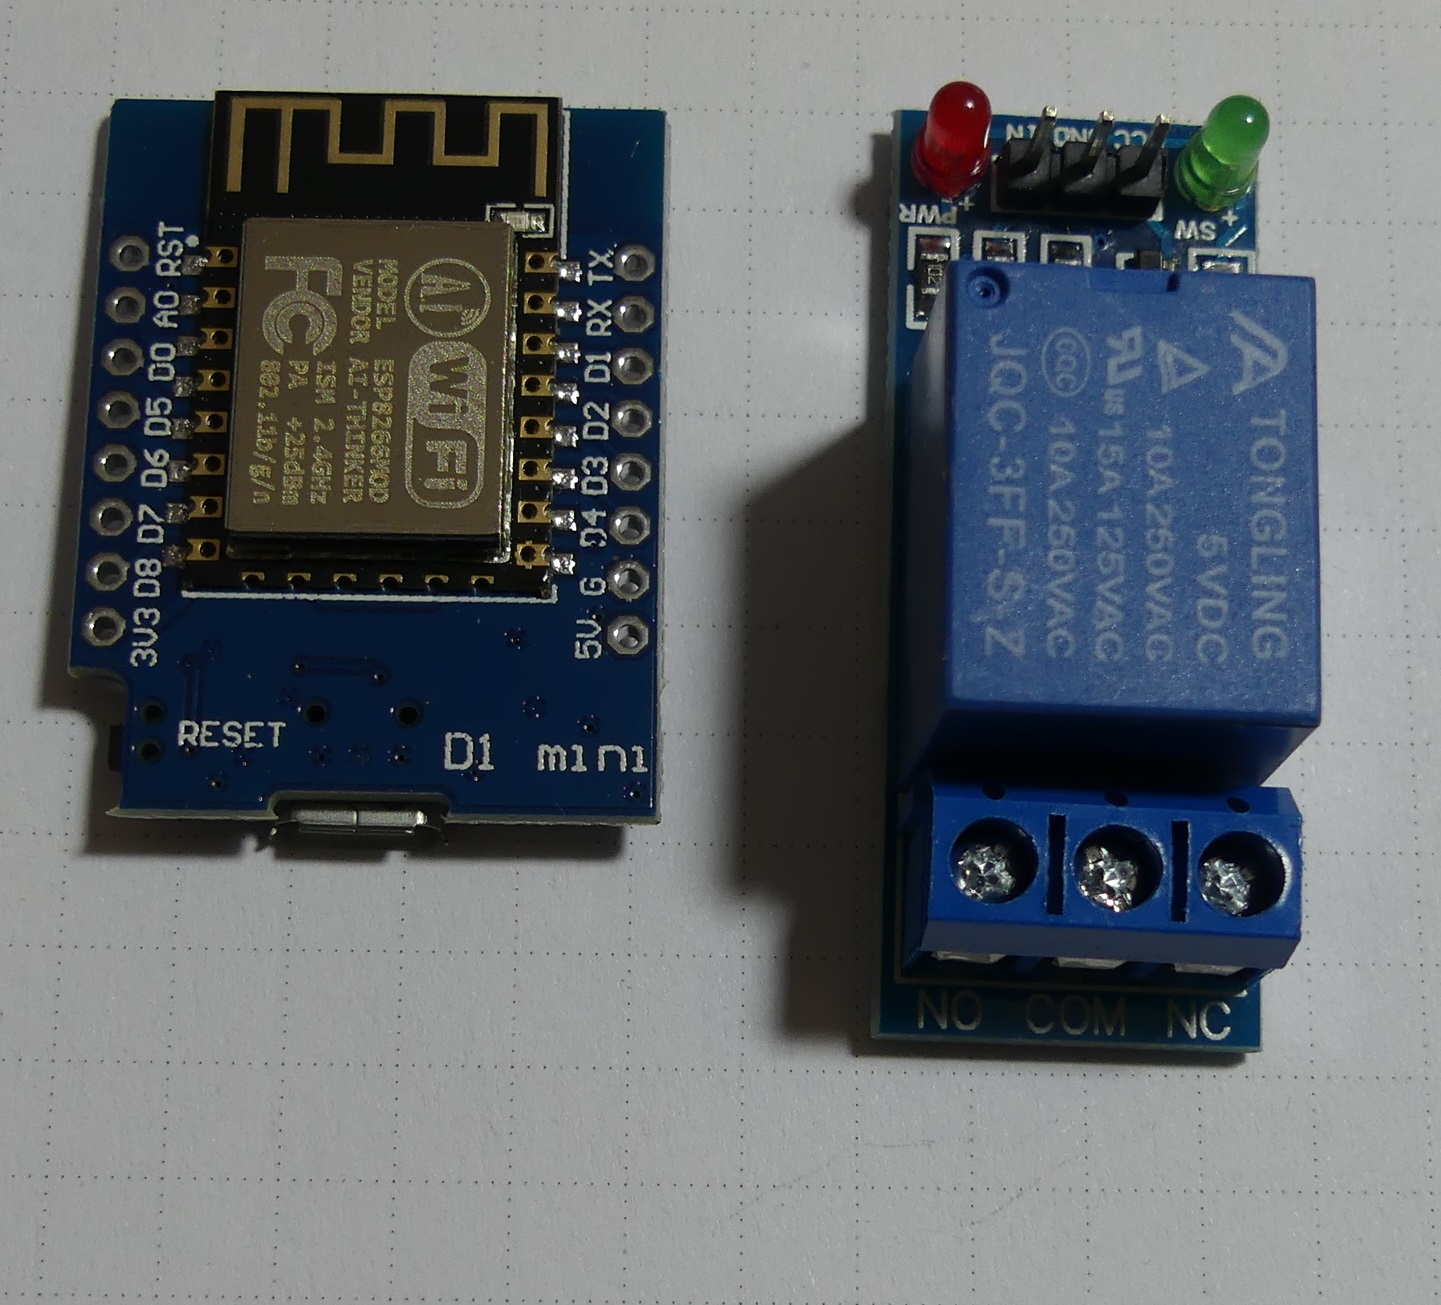 Get Started With Wemos D1 Mini ESP8266, Arduino IDE